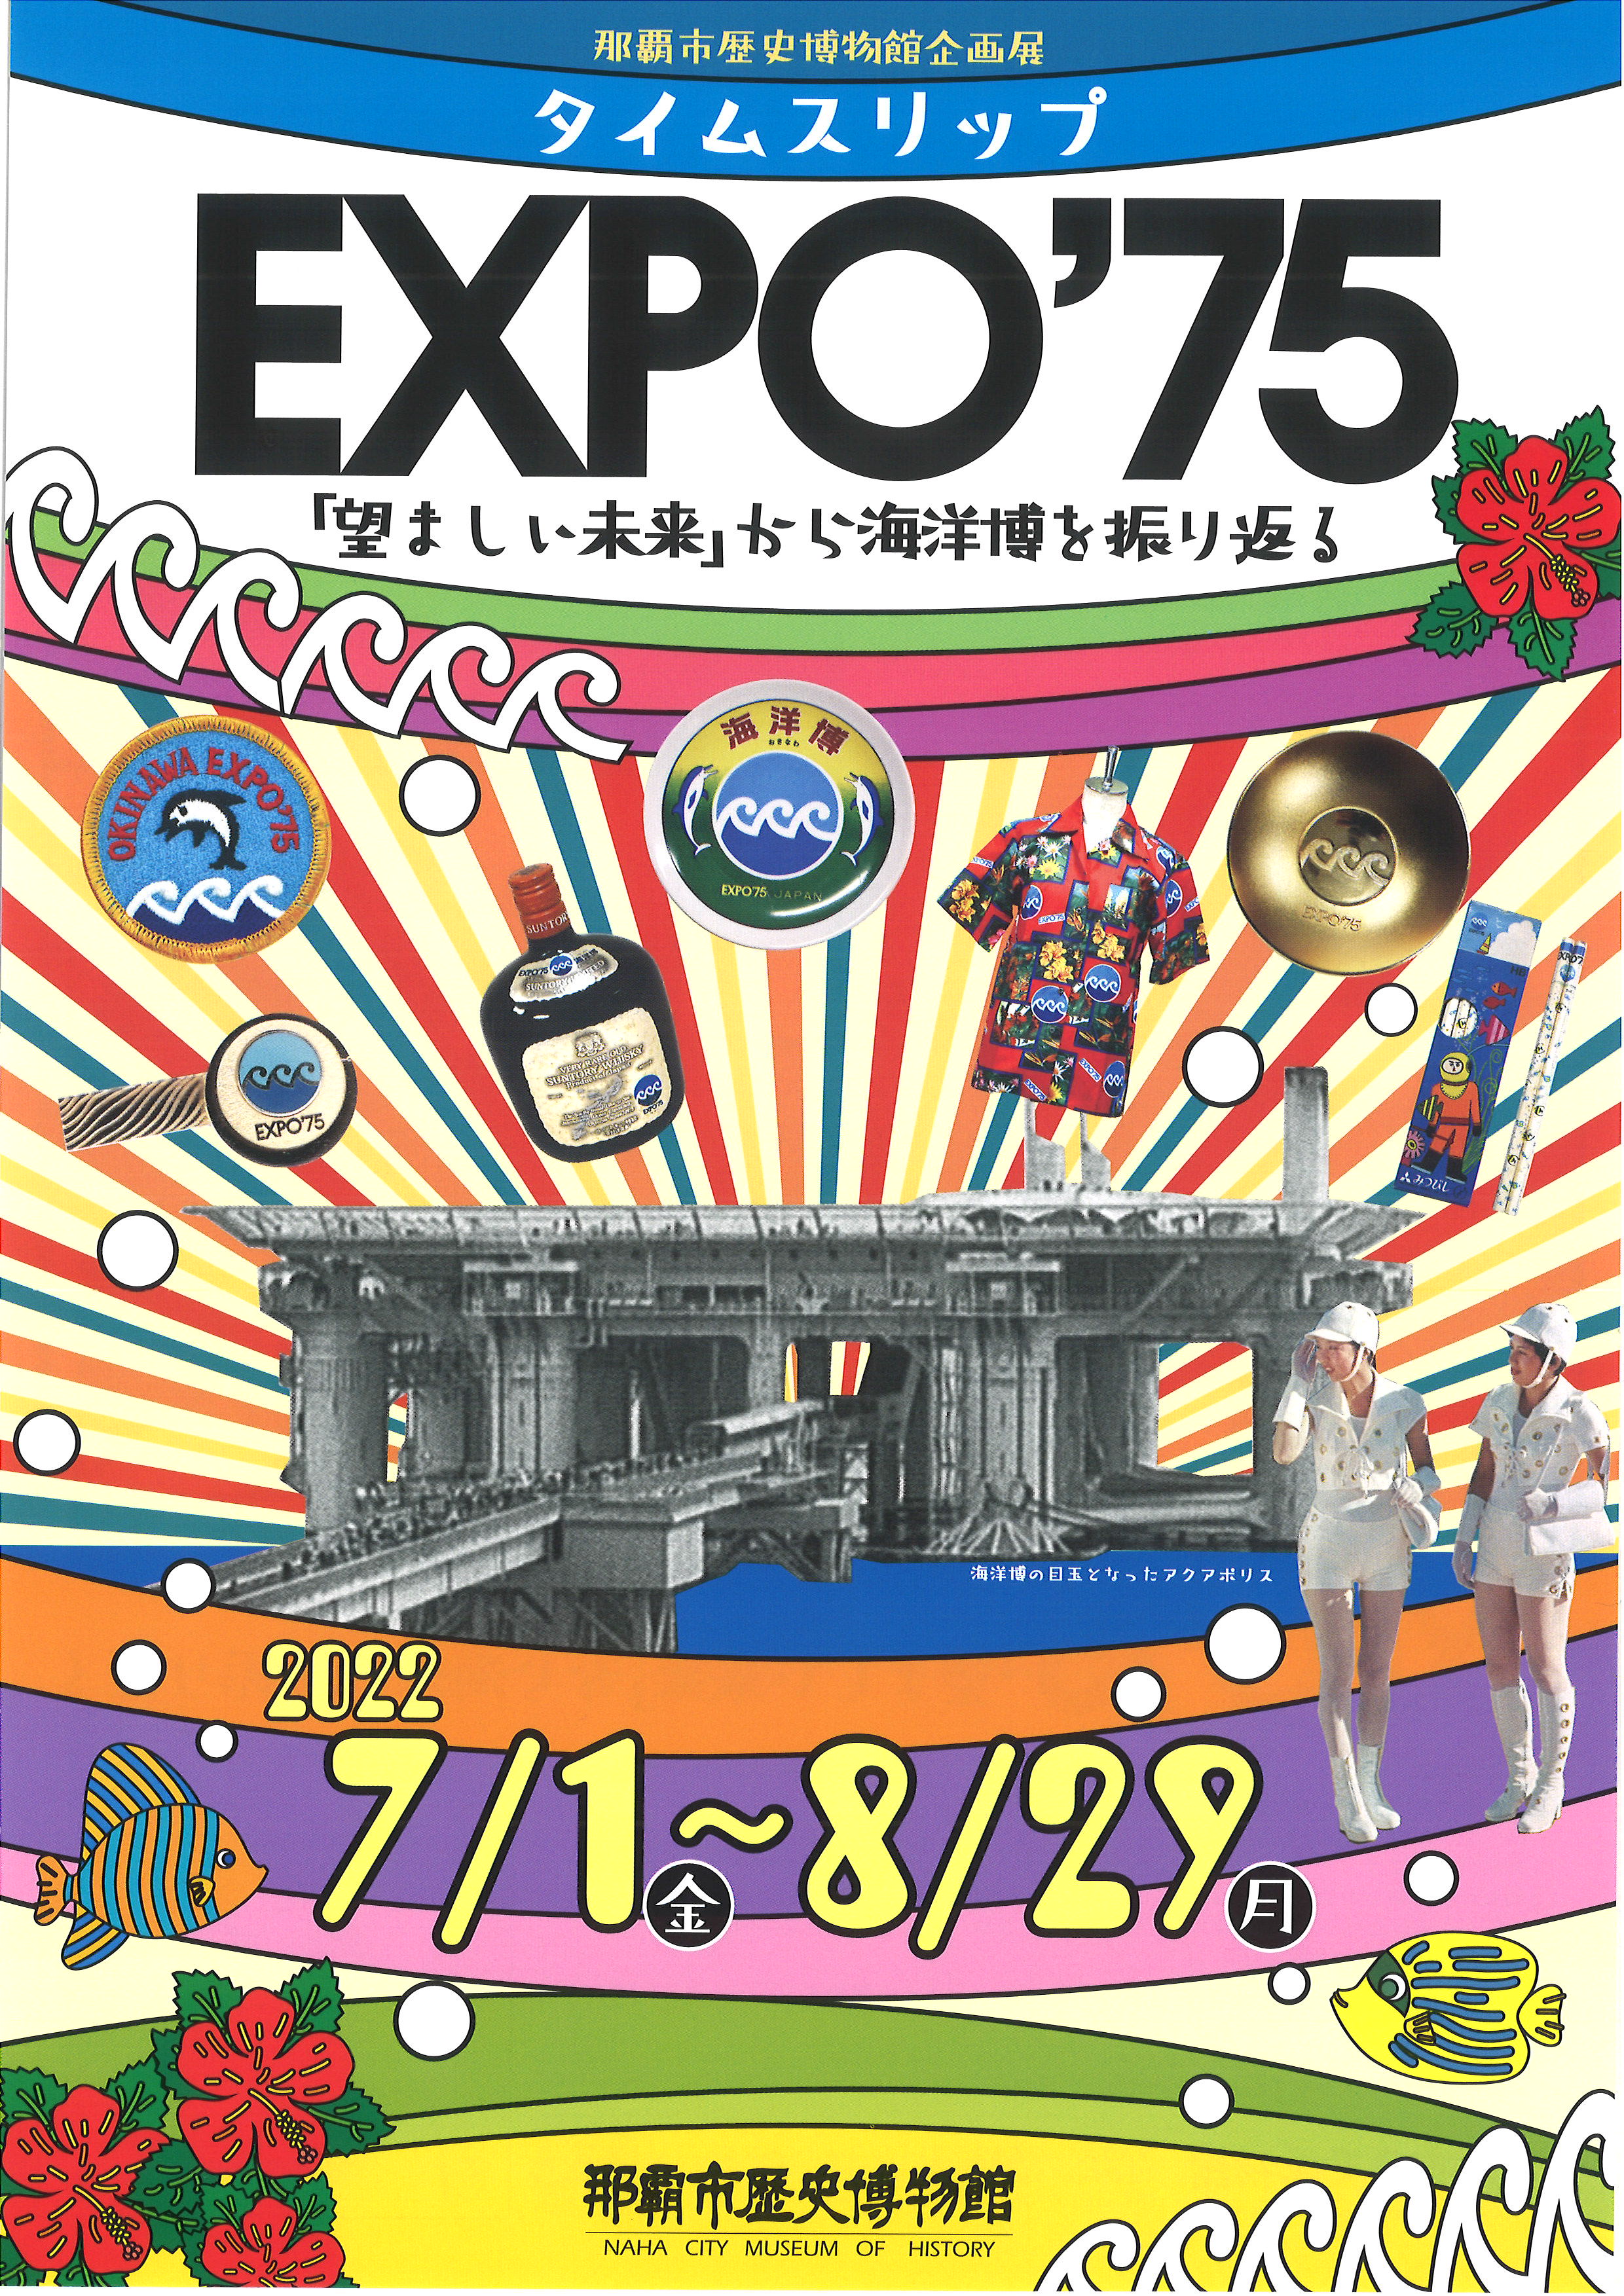 OKINAWA Japan EXPO75